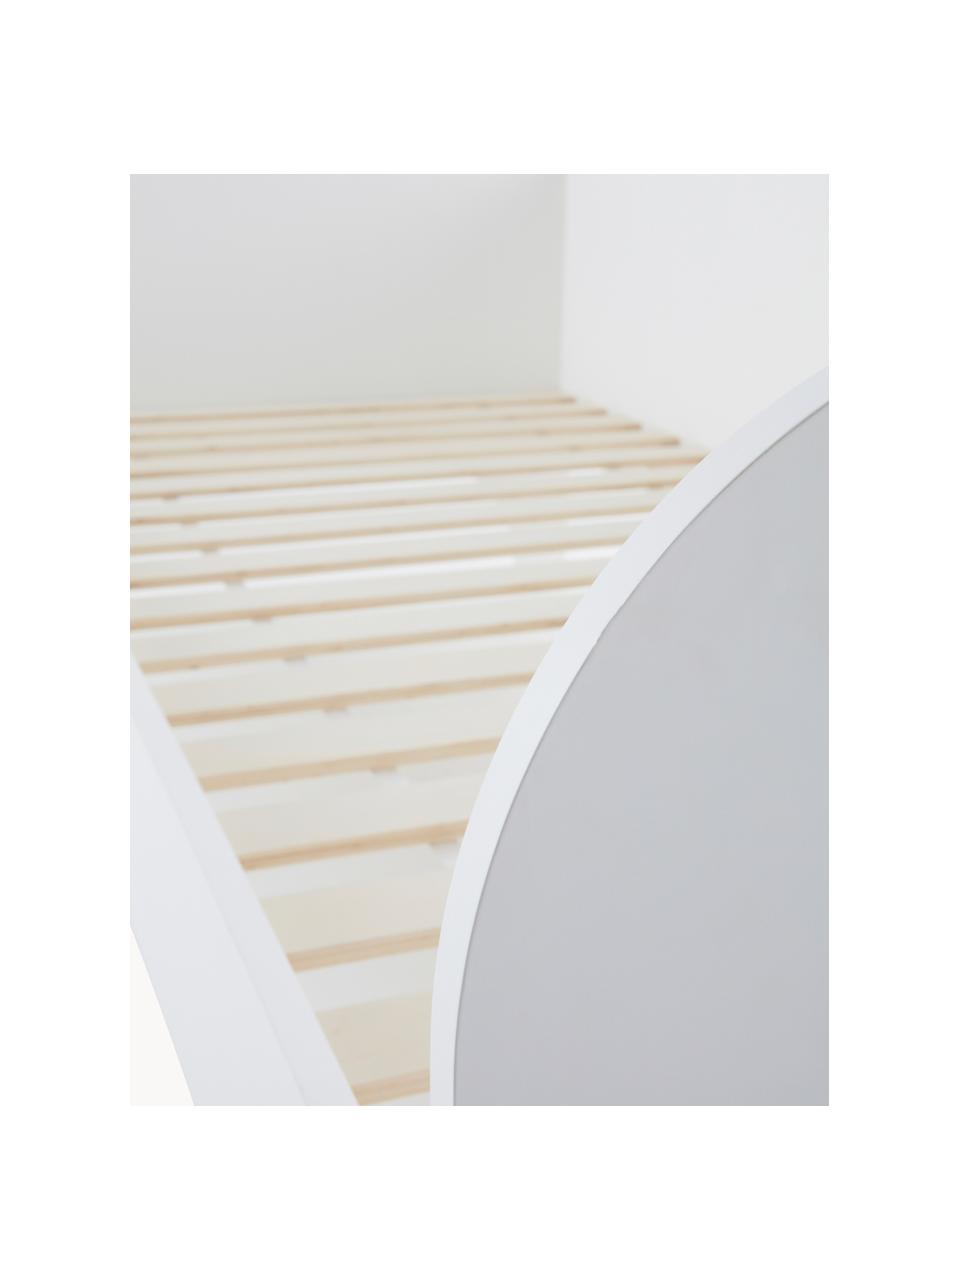 Holz-Kinderbett Phant, 90 x 200 cm, Mitteldichte Holzfaserplatte (MDF), Holz, weiss lackiert, B 90 x L 200 cm